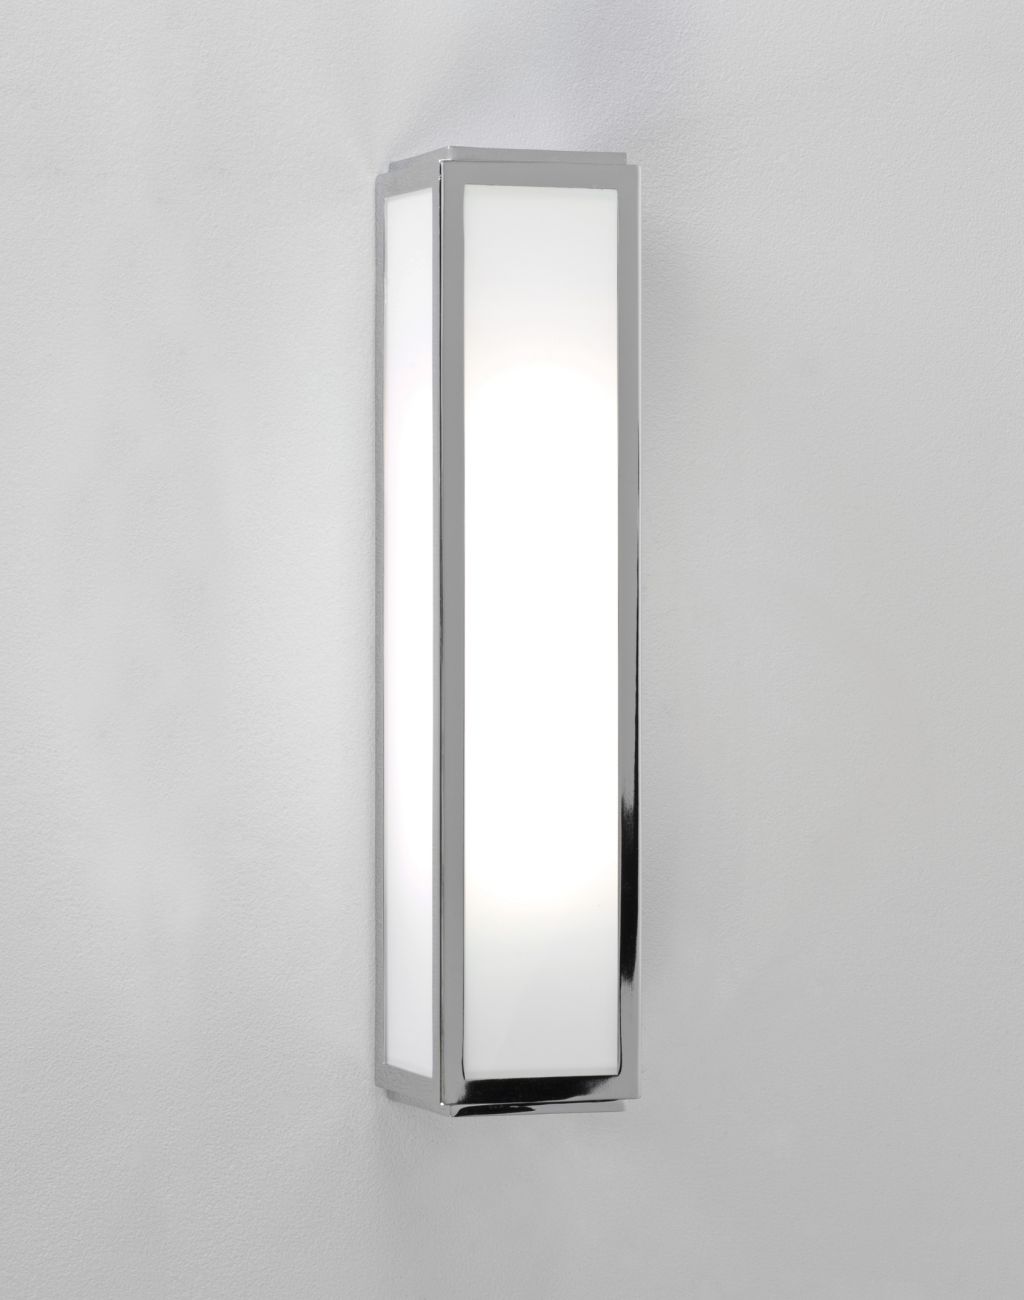 ASTRO Mashiko 360 LED bathroom wall light (1121018)